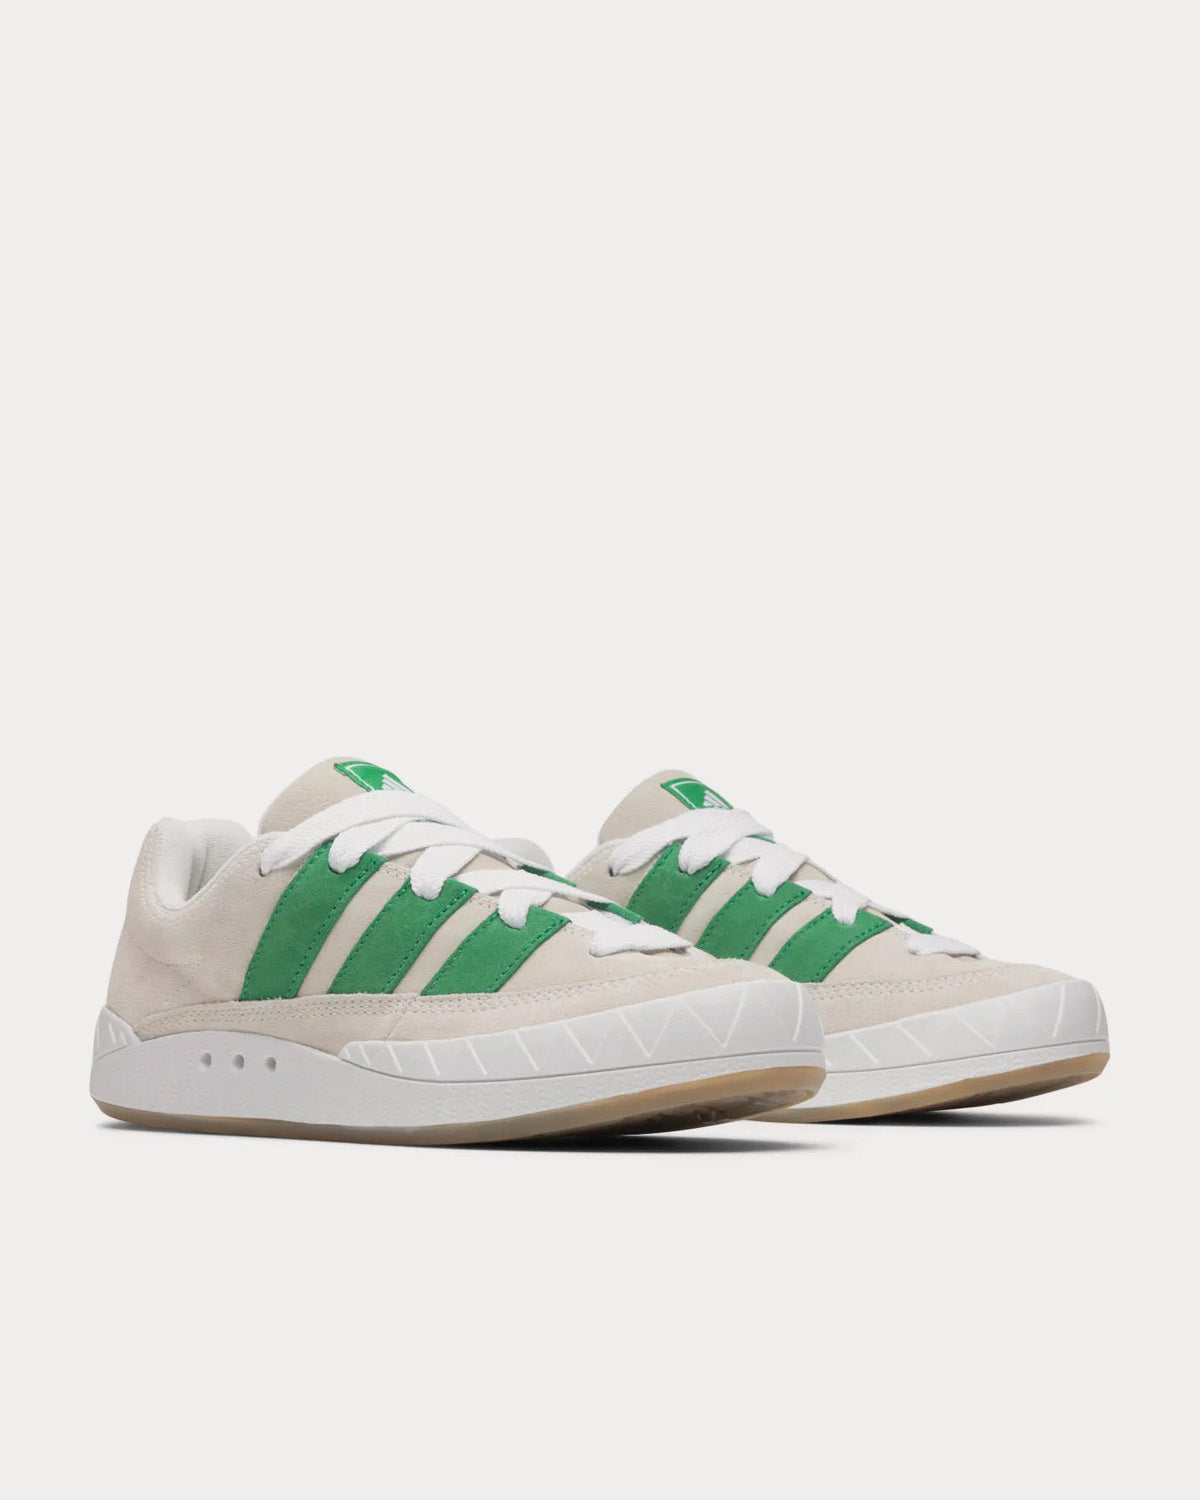 Adidas x Beams - x Bodega Adimatic Off-White / Green Low Top Sneakers